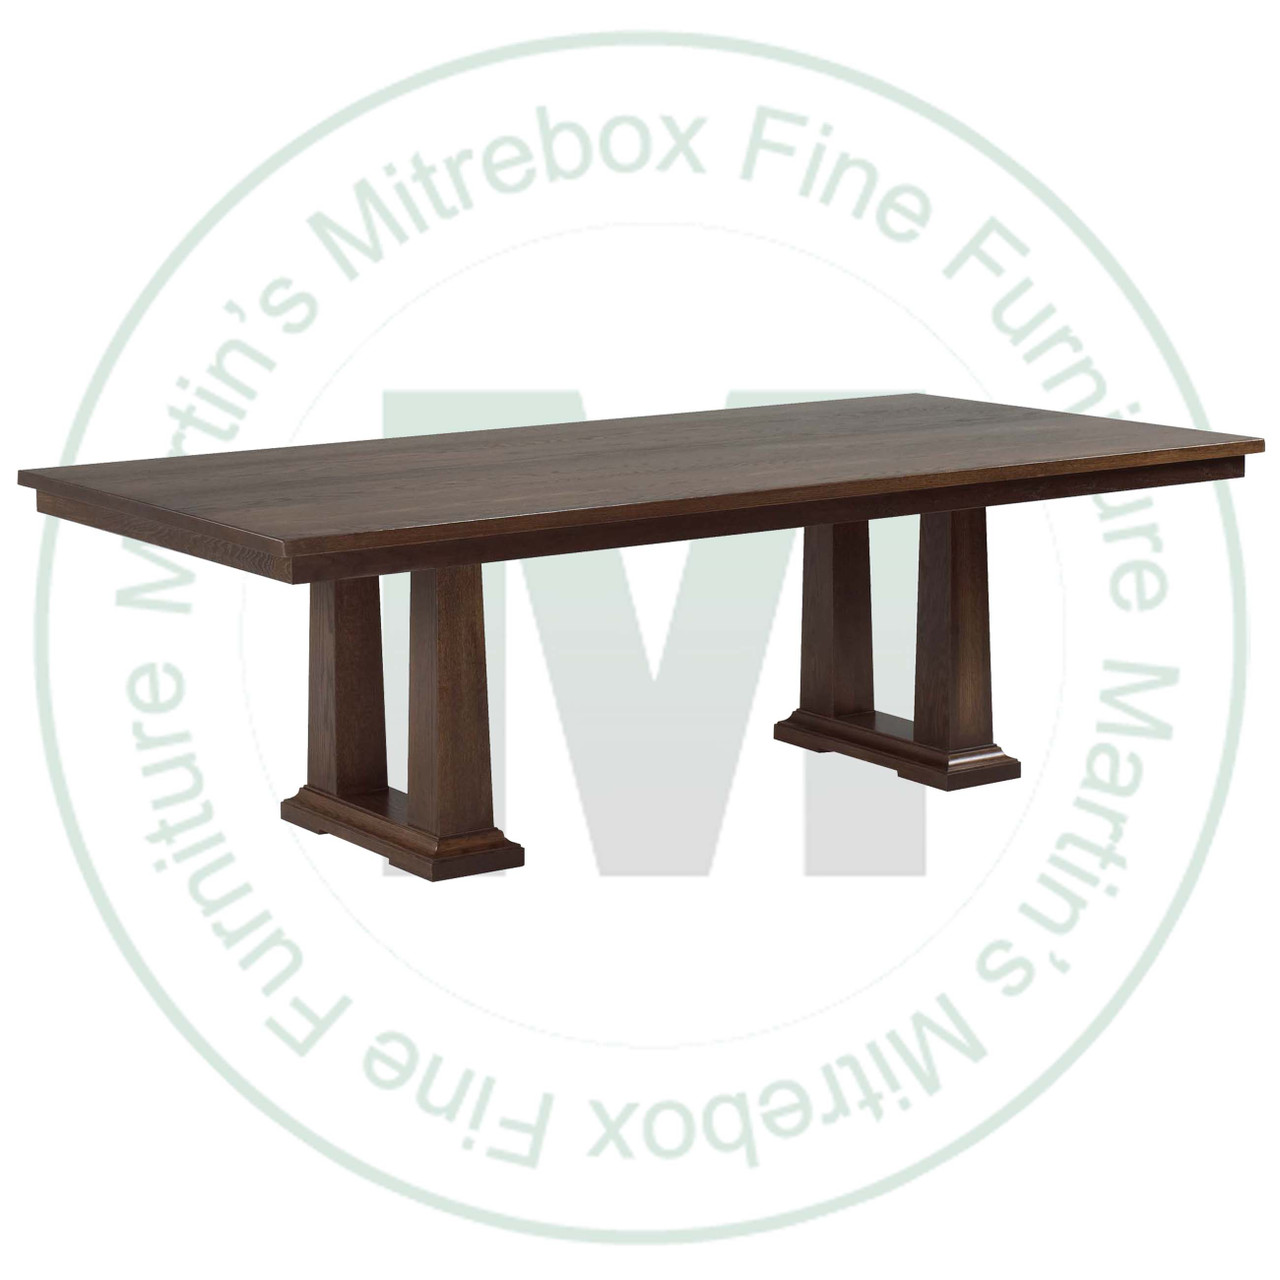 Oak Acropolis Solid Top Double Pedestal Table 54''D x 84''W x 30''H Table Has 1.75'' Thick Top